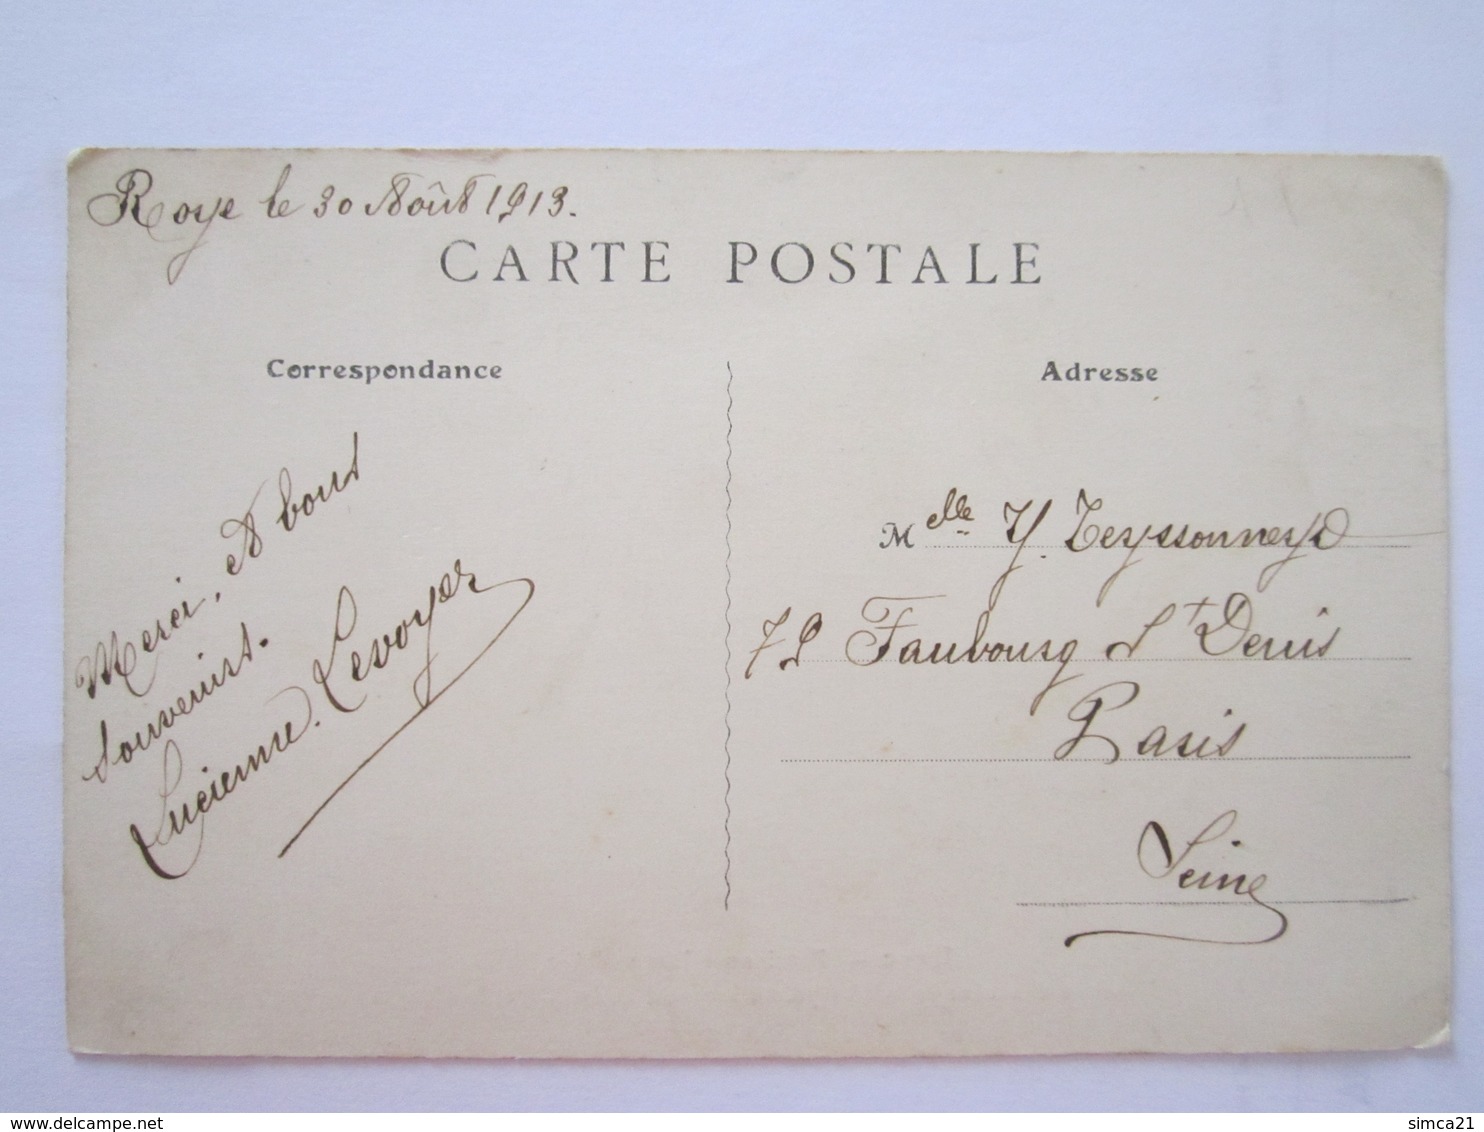 CARTE POSTALE ROYE PENSIONNAT JEANNE D'ARC 1913 - Roye